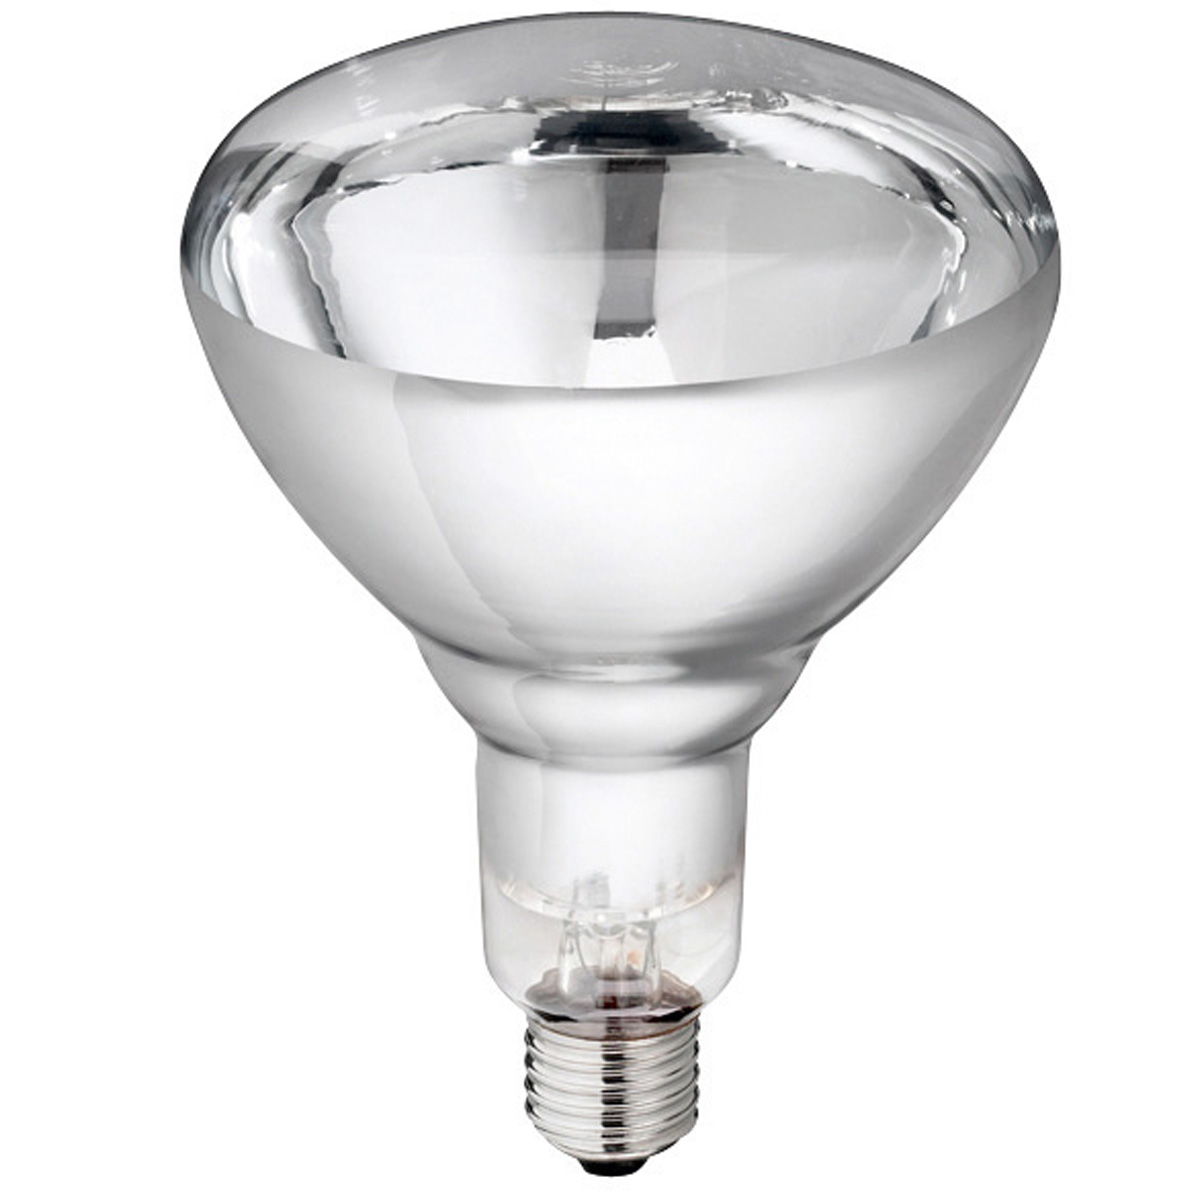 Lampe Philips en verre dur  clair 150 w